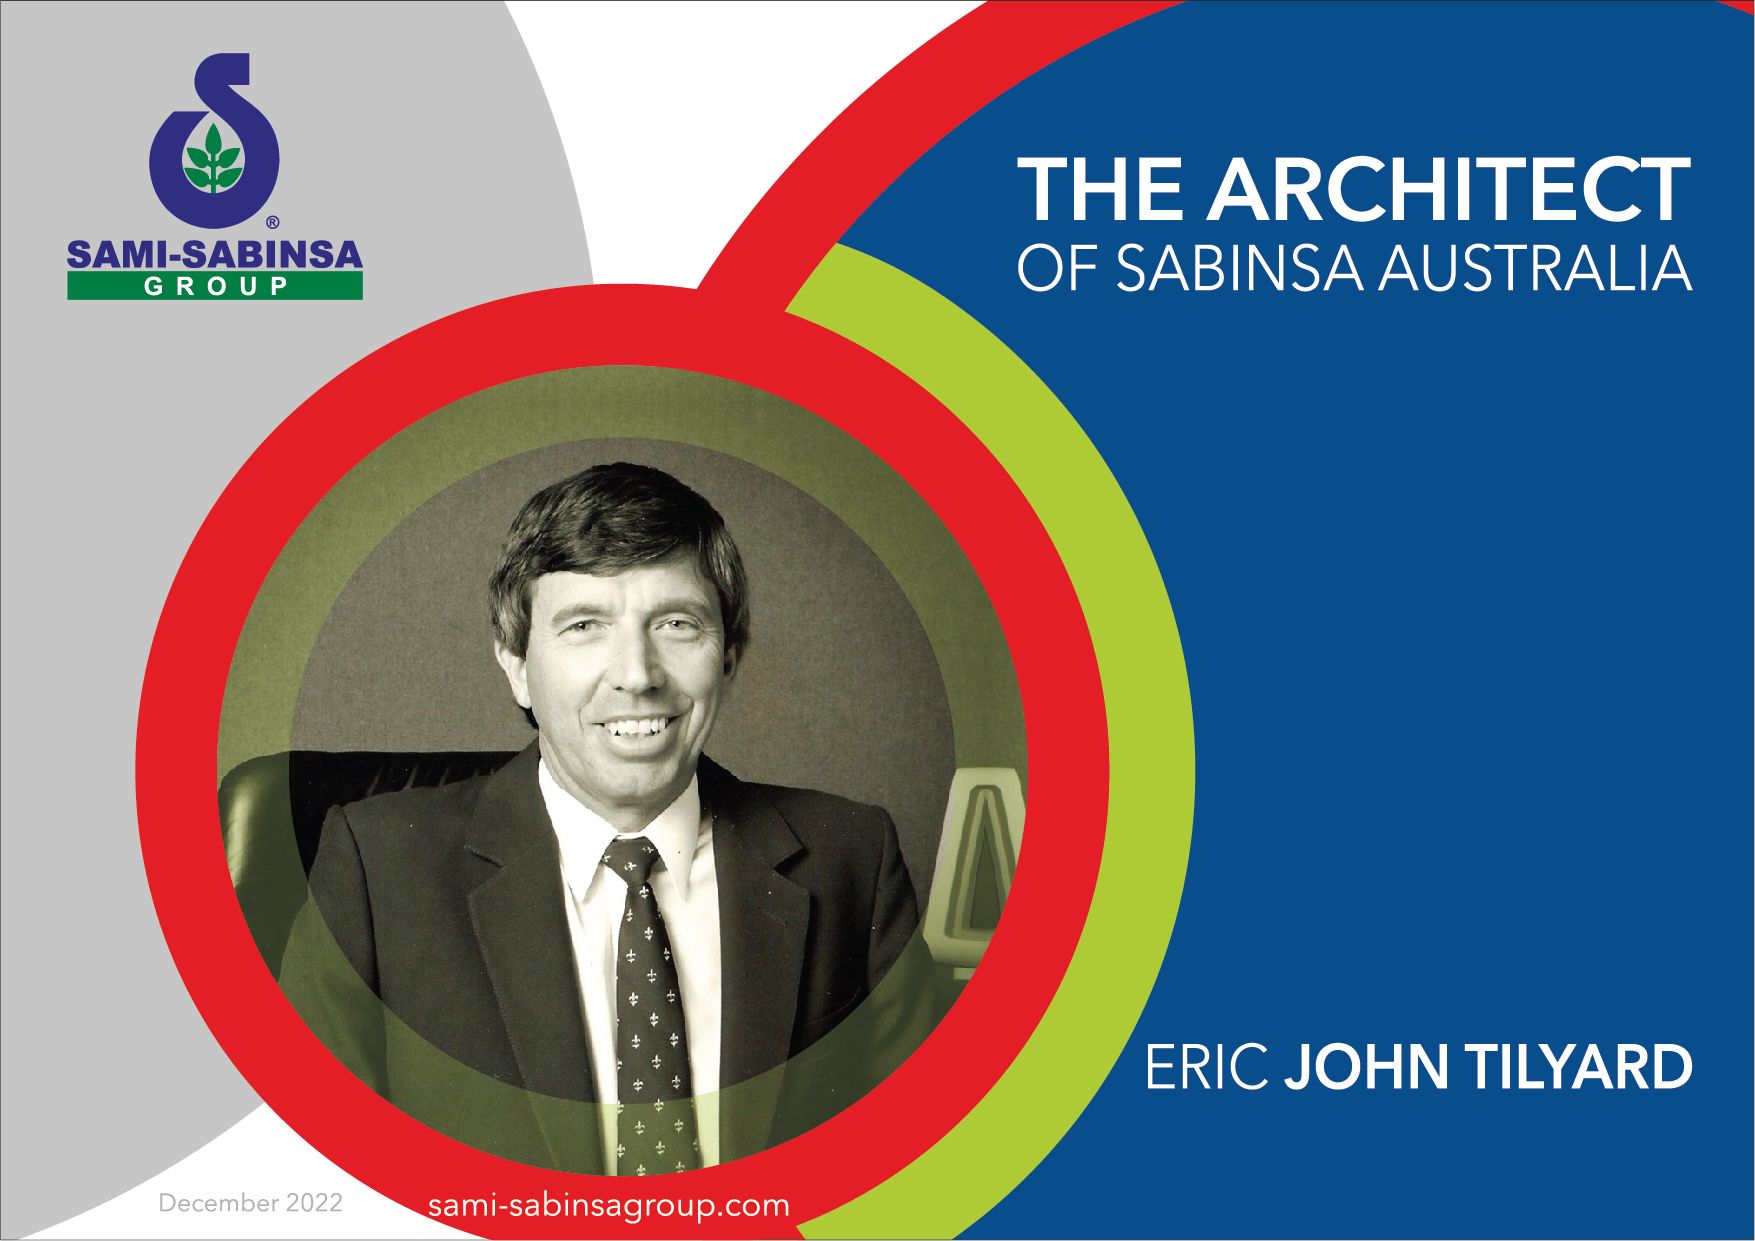 The Architect of Sabinsa Australia